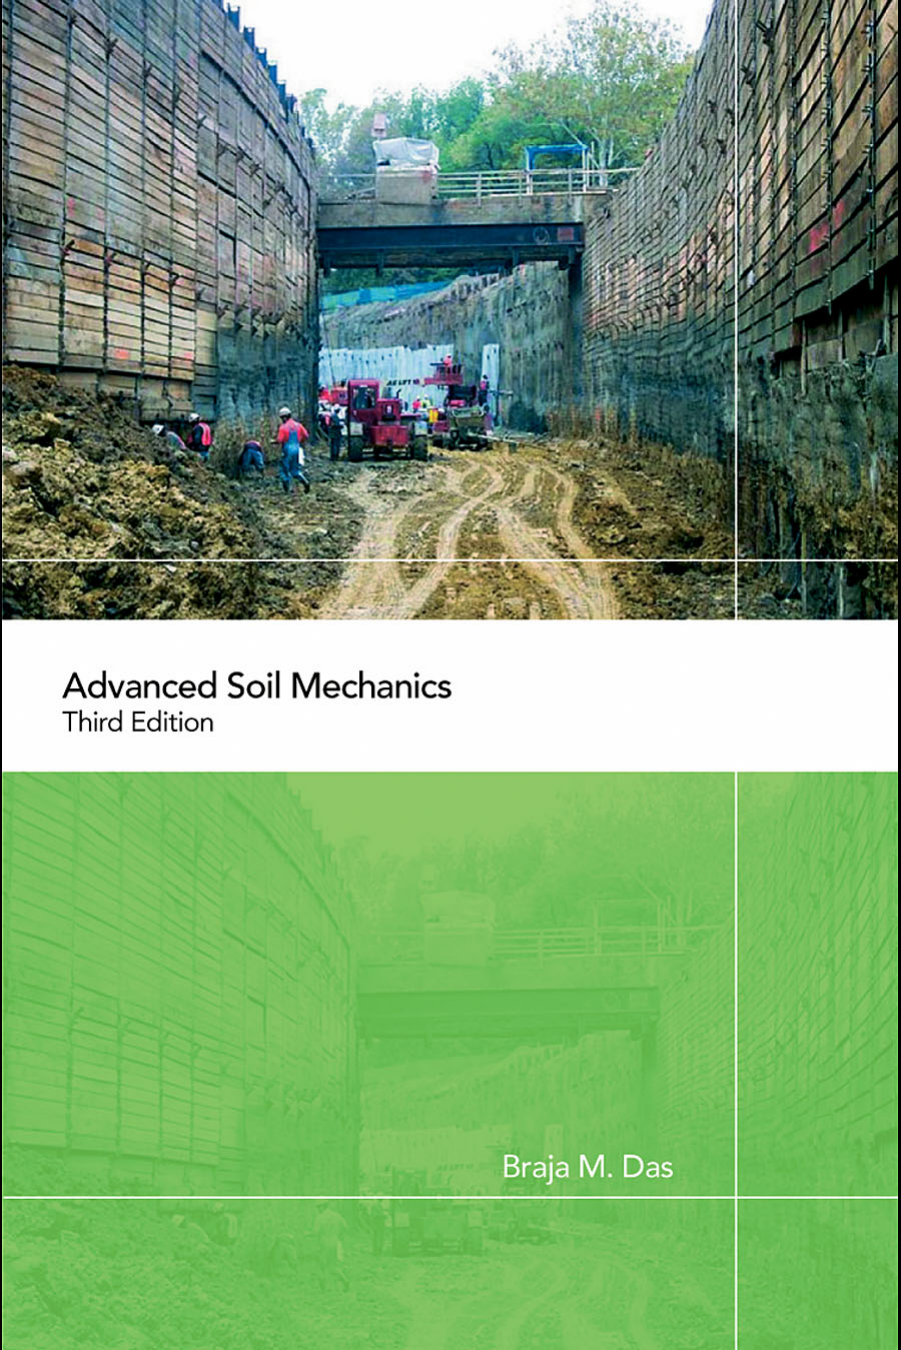 Advanced Soil Mechanics 3rd ed Baraja M Das